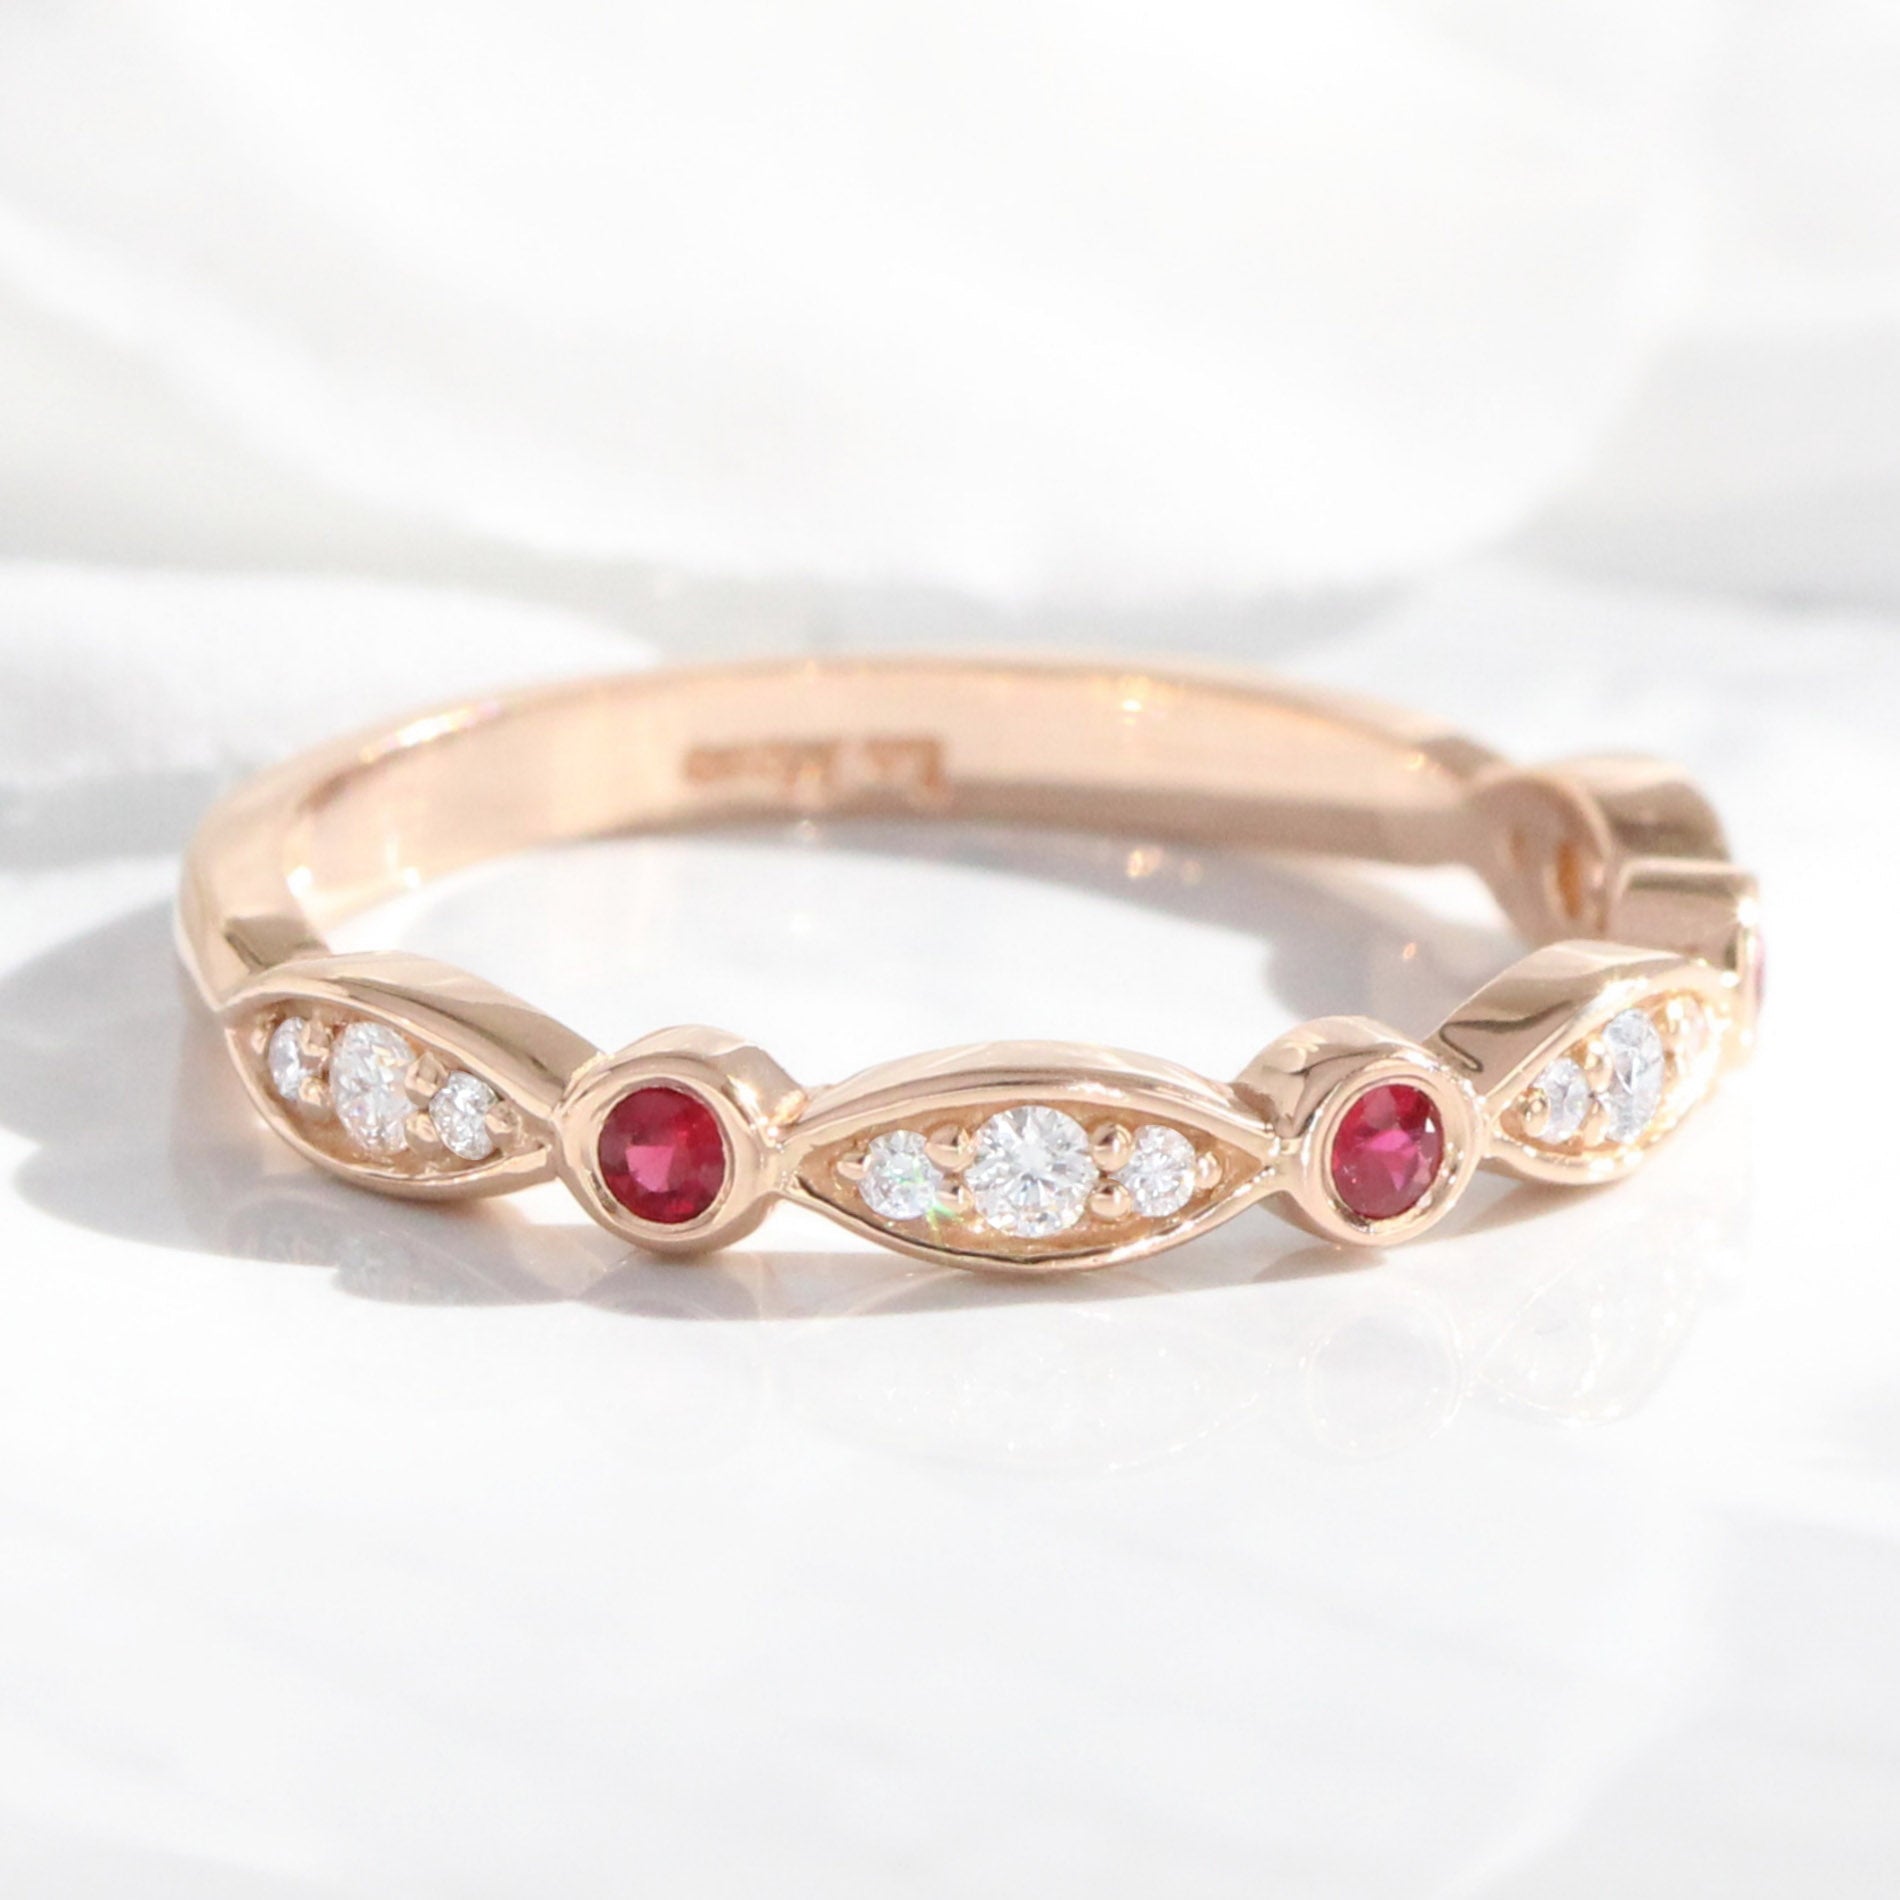 Bezel diamond and ruby wedding ring rose gold scalloped half eternity band la more design jewelry